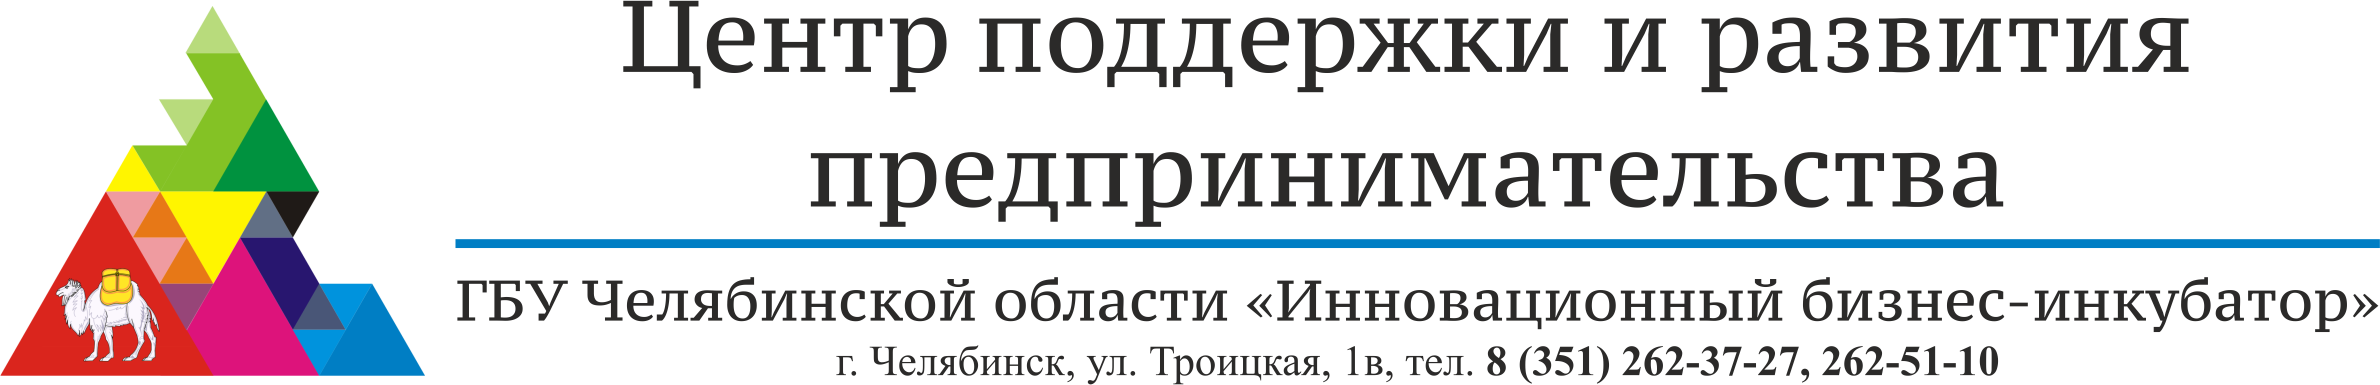 innovation-chel logo